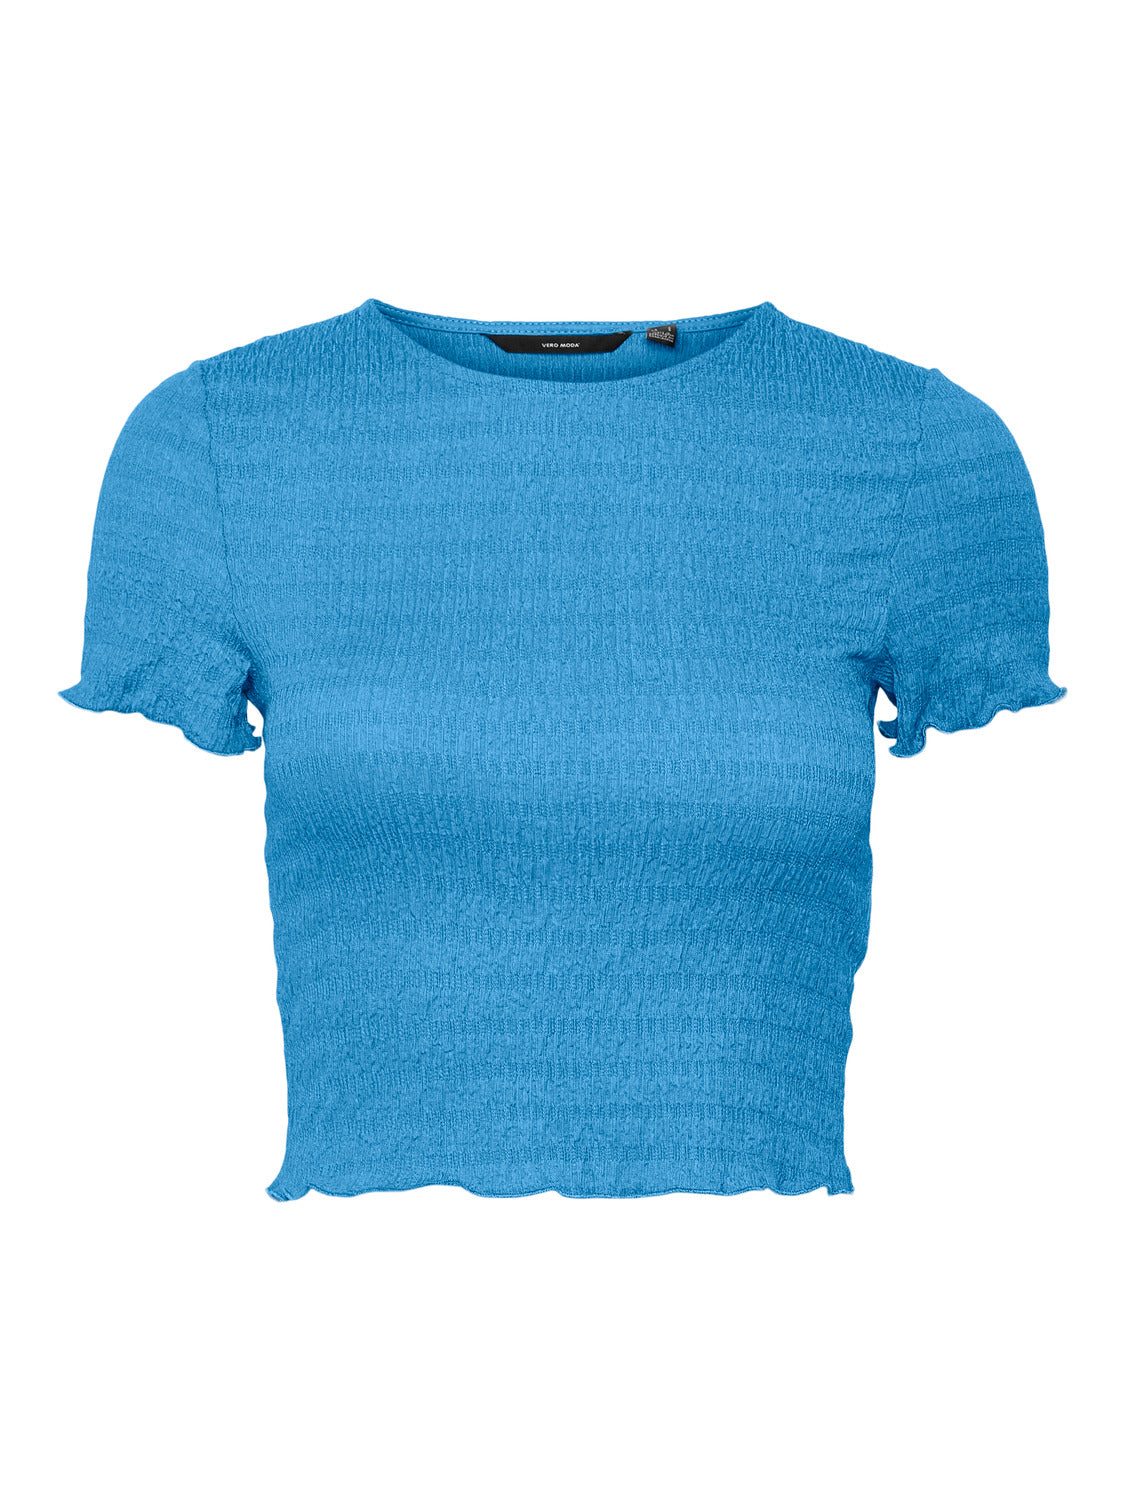 VMNYNNE T-Shirts & Tops - Little Boy Blue